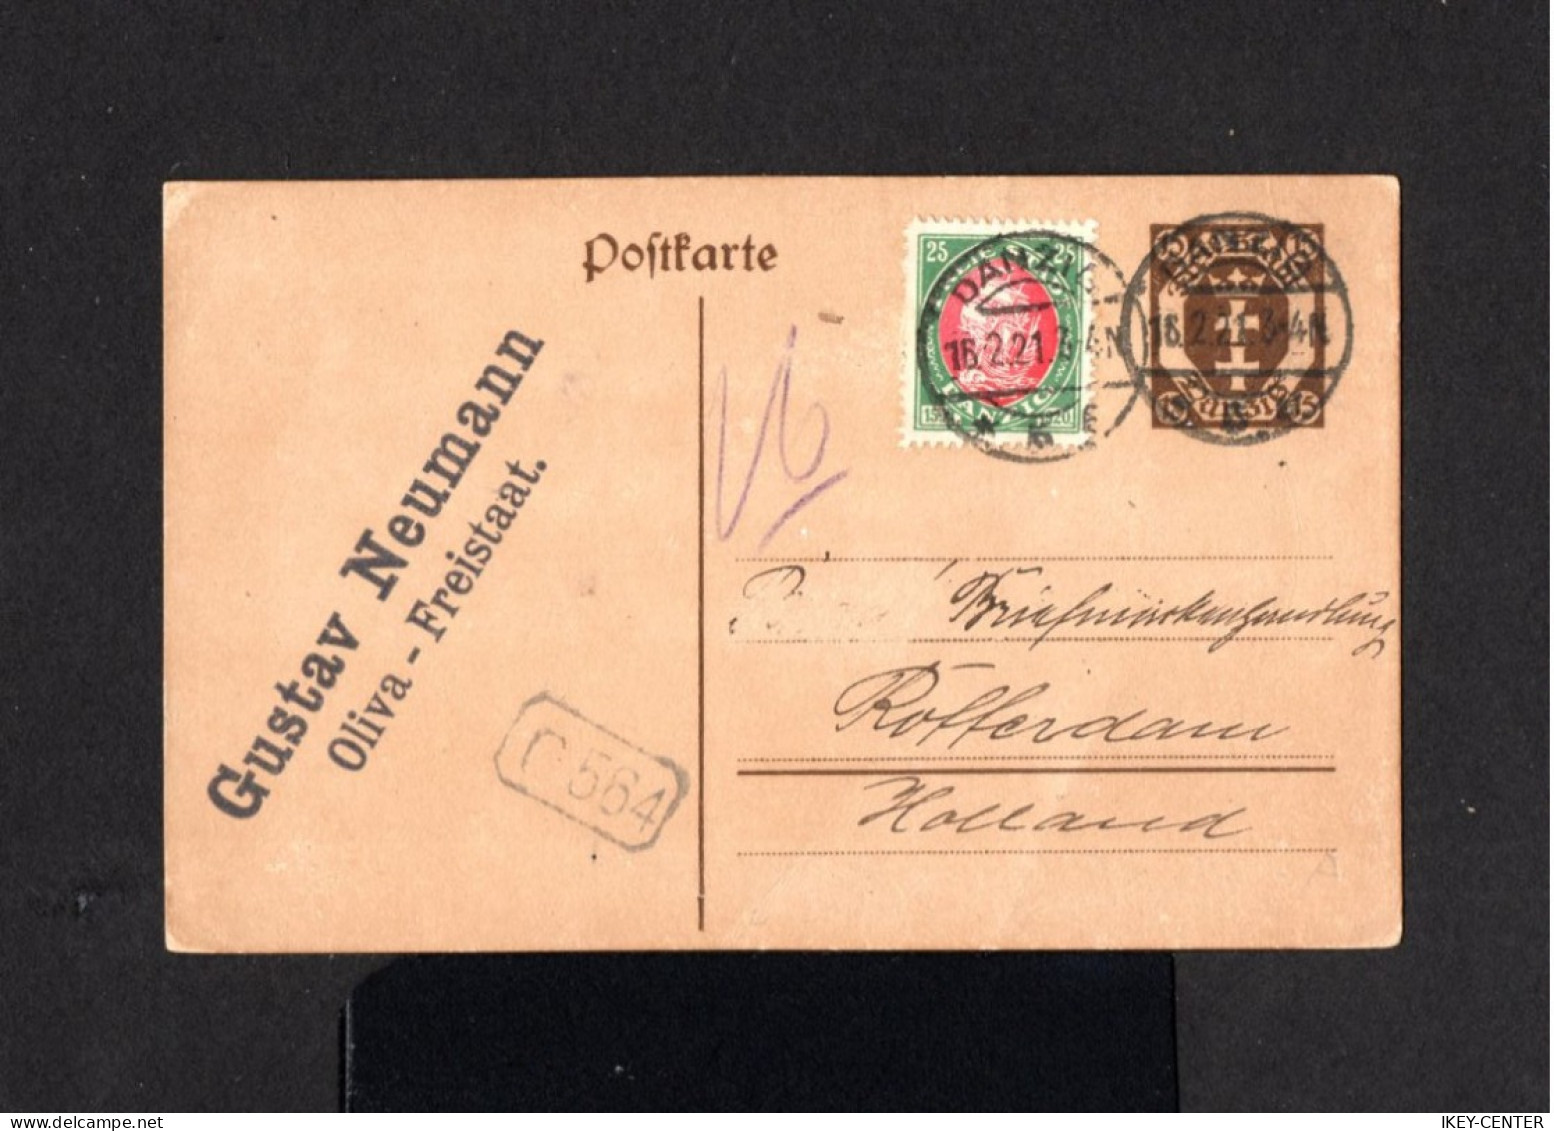 13523-DANZIG FREE STADT-OLD POSTCARD DANZIG To ROTTERDAM (holland).1921.Carte Postale.GERMANY. - Postal  Stationery